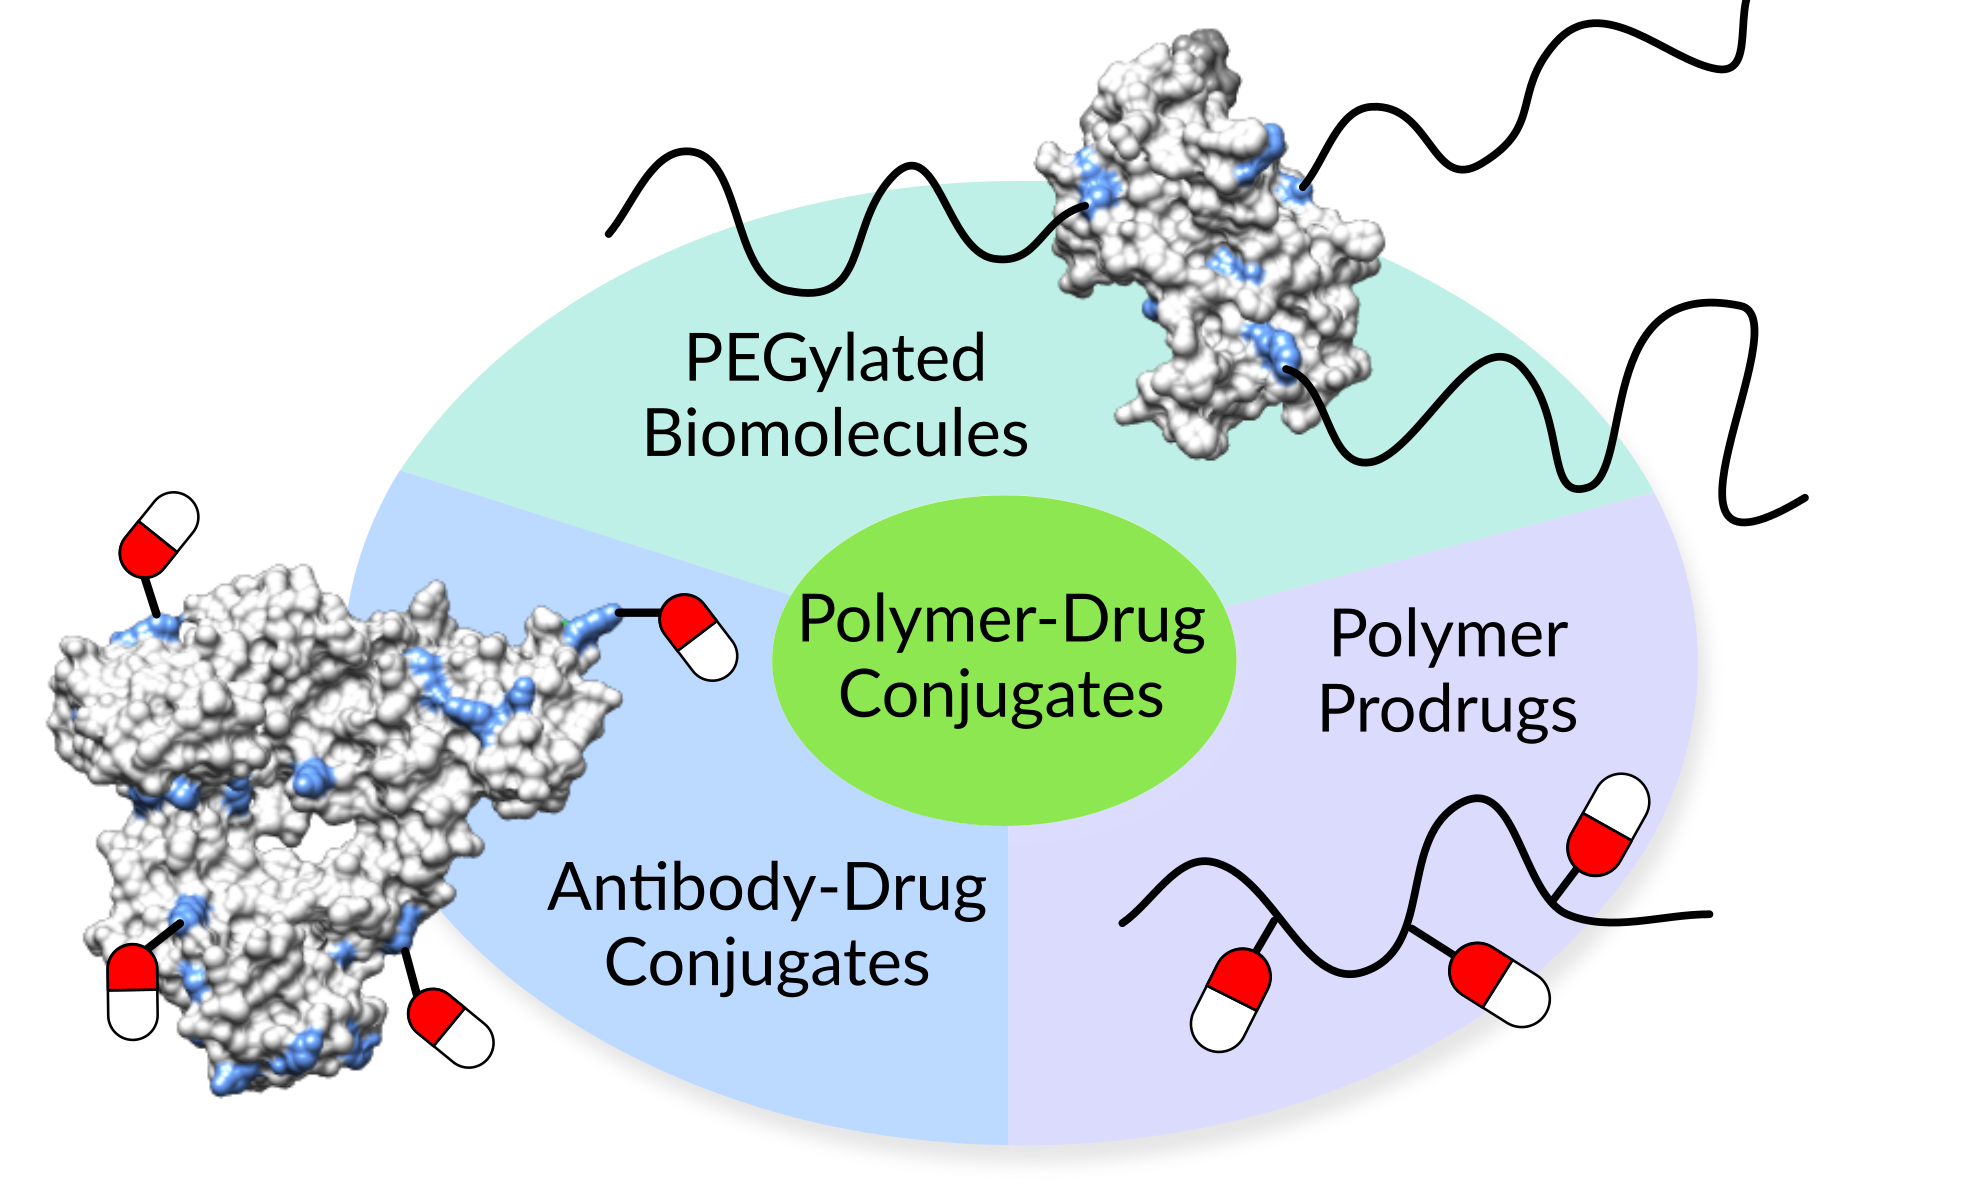 Polymer-drug conjugates include polymer prodrugs, PEGylated biomolecules, and antibody-drug conjugates